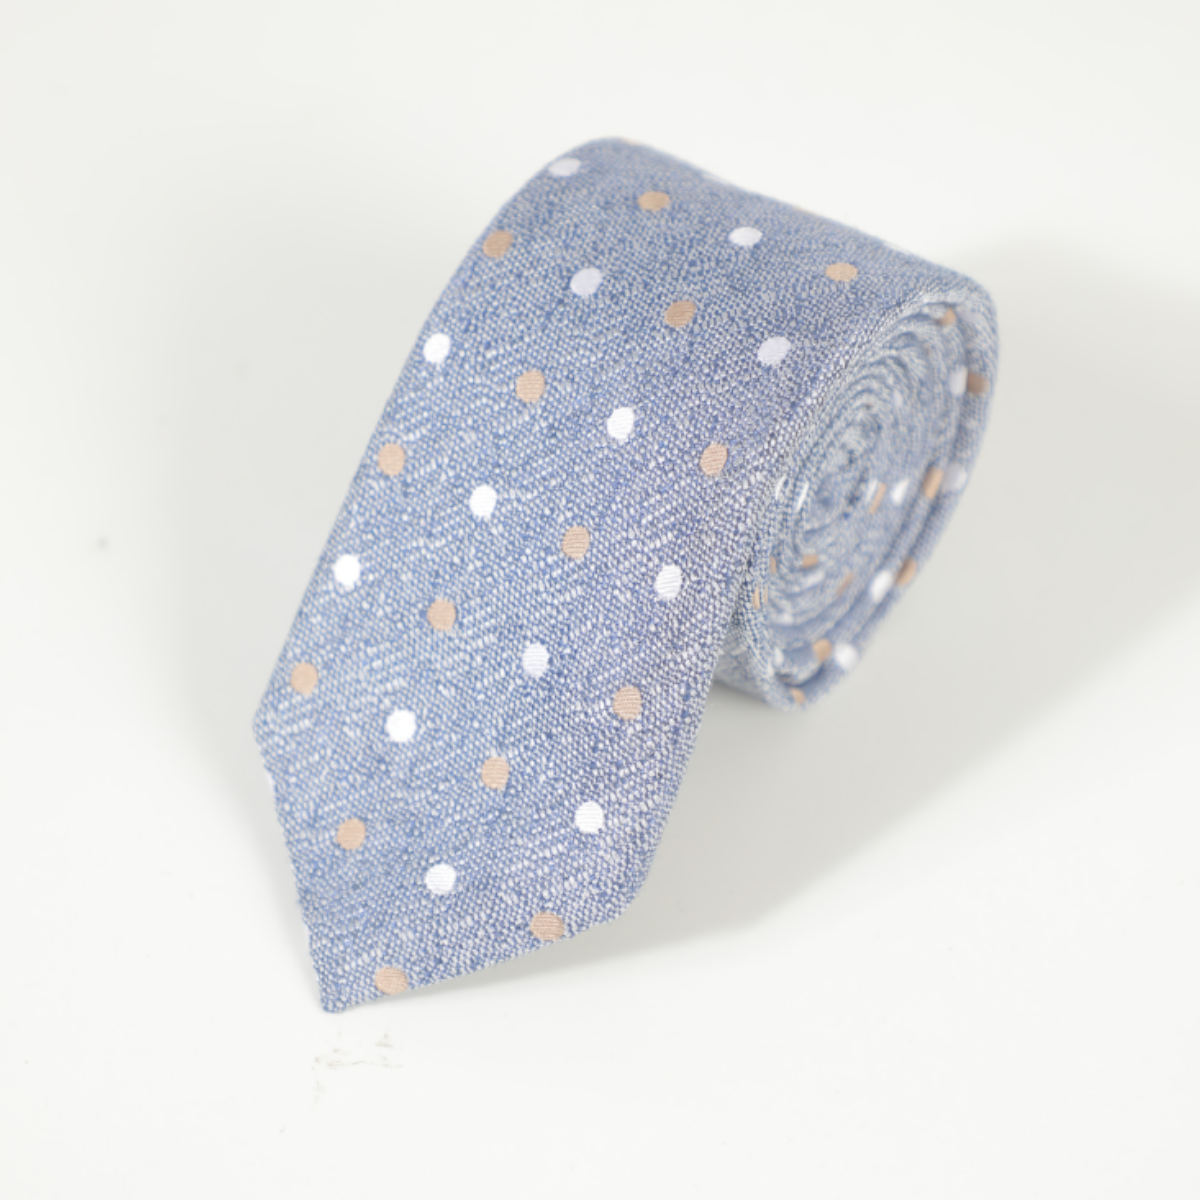 D's Damat Blue Tie With Dots Pattern